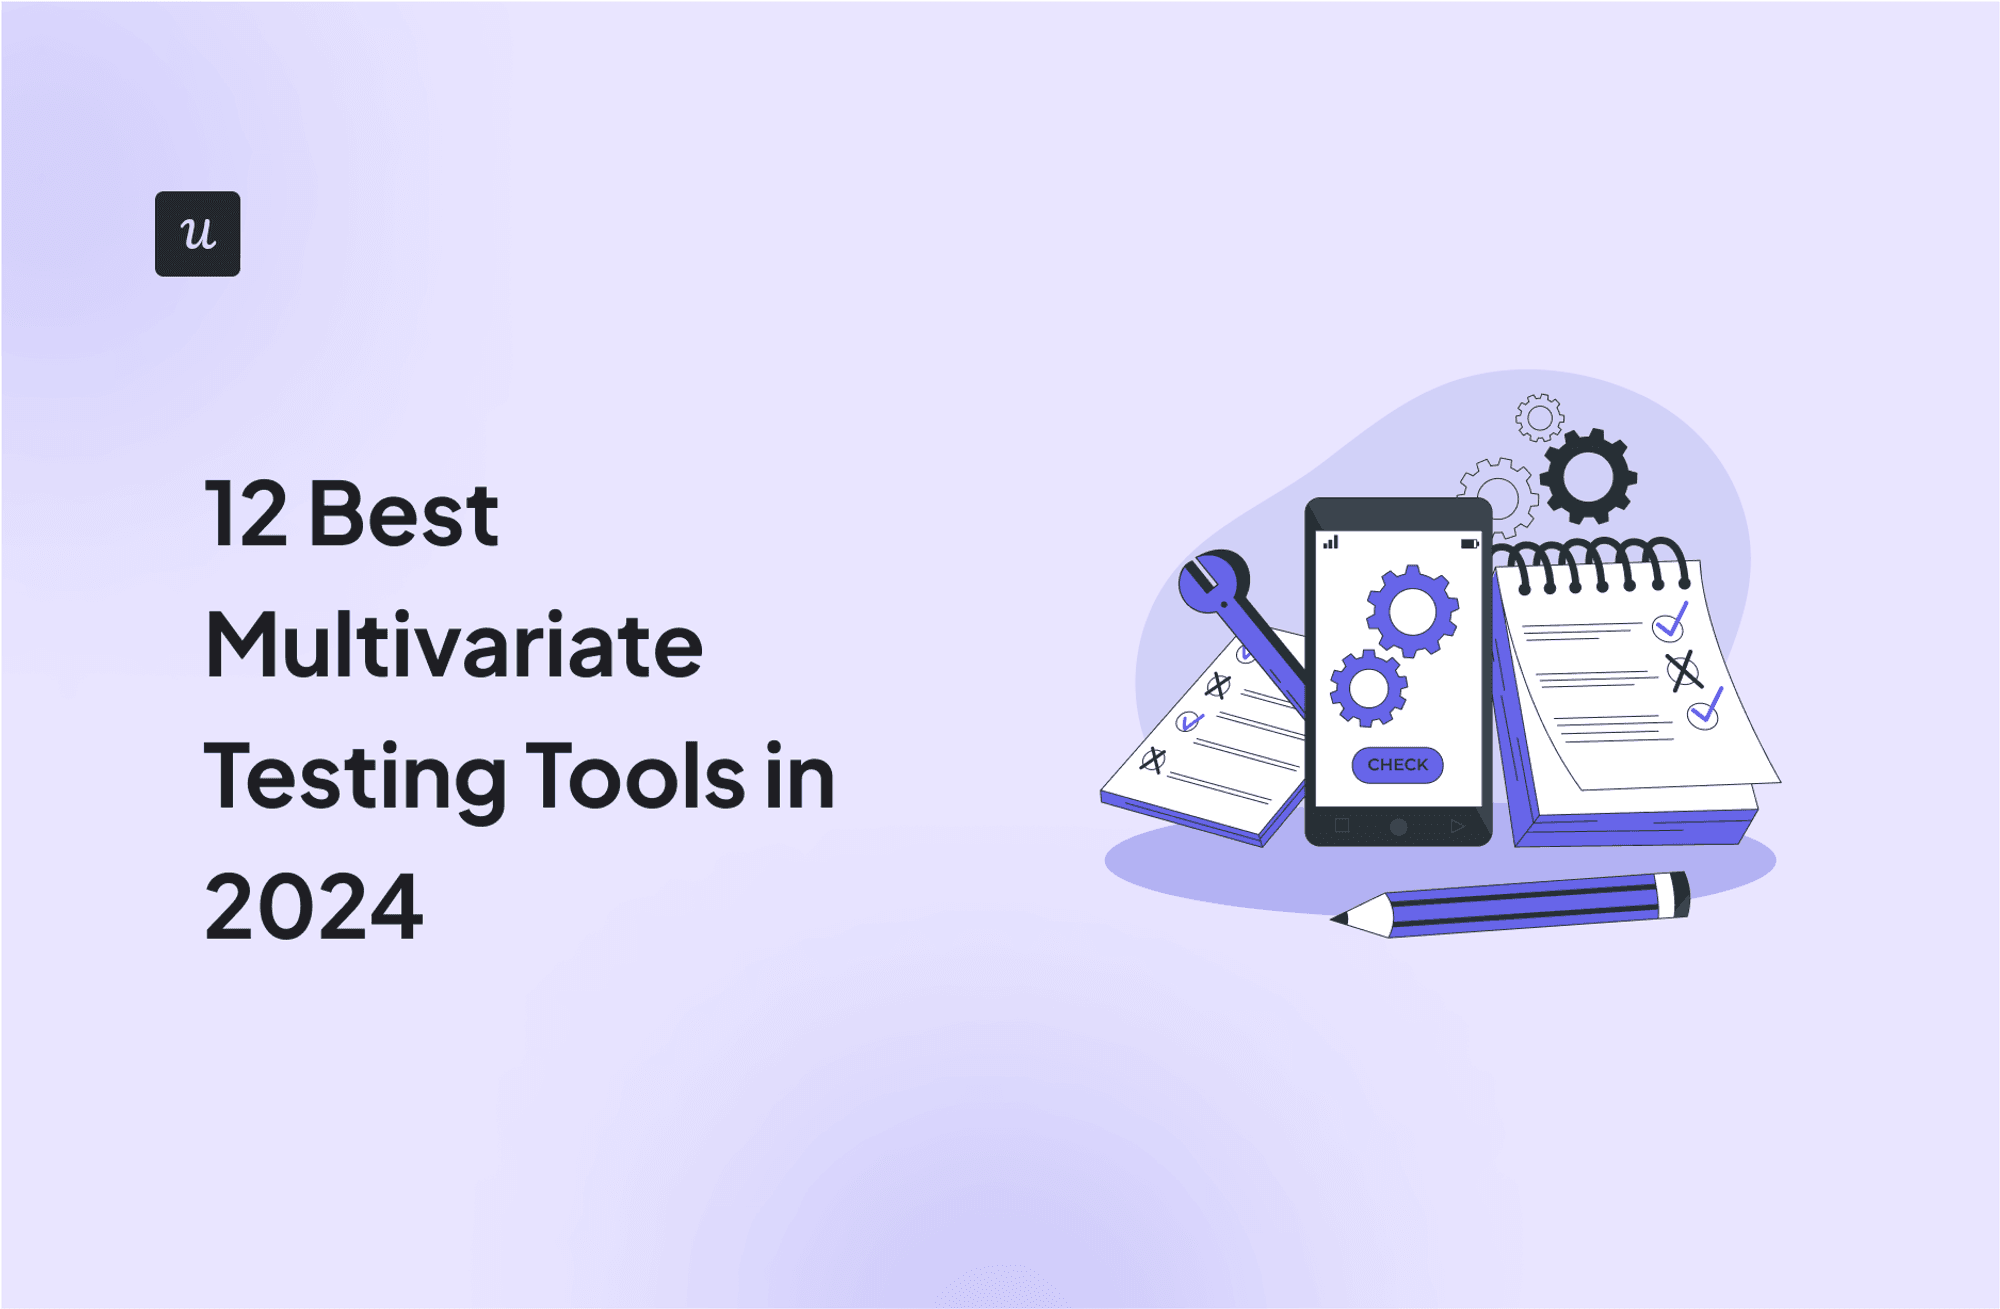 12 Best Multivariate Testing Tools in 2024 cover